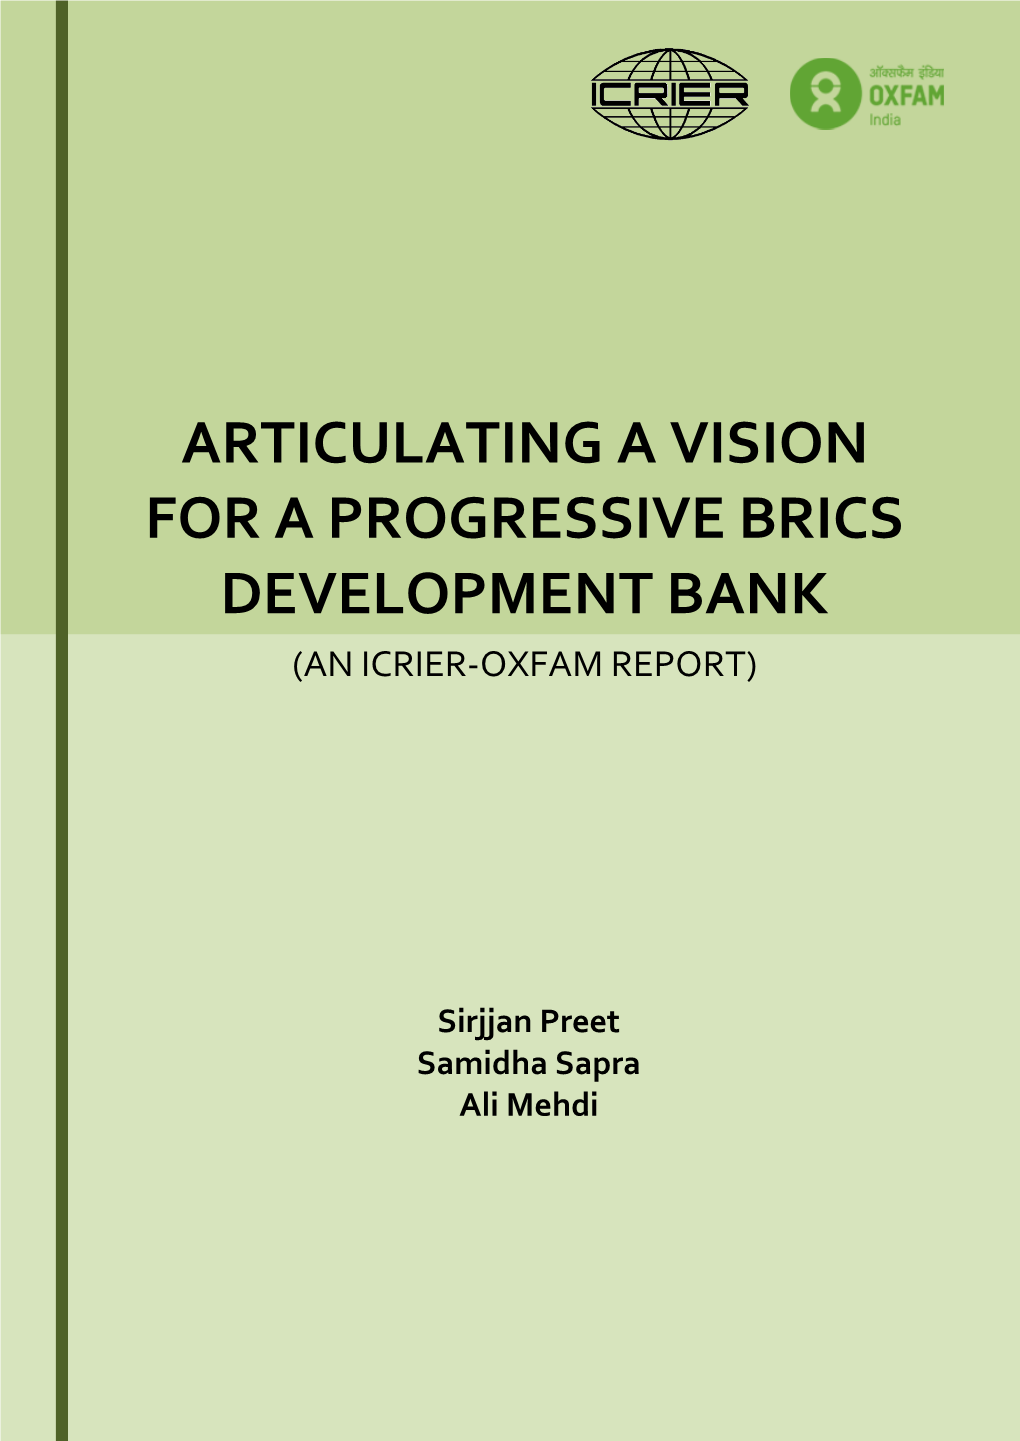 Case Study of the Asian Development Bank (ADB)